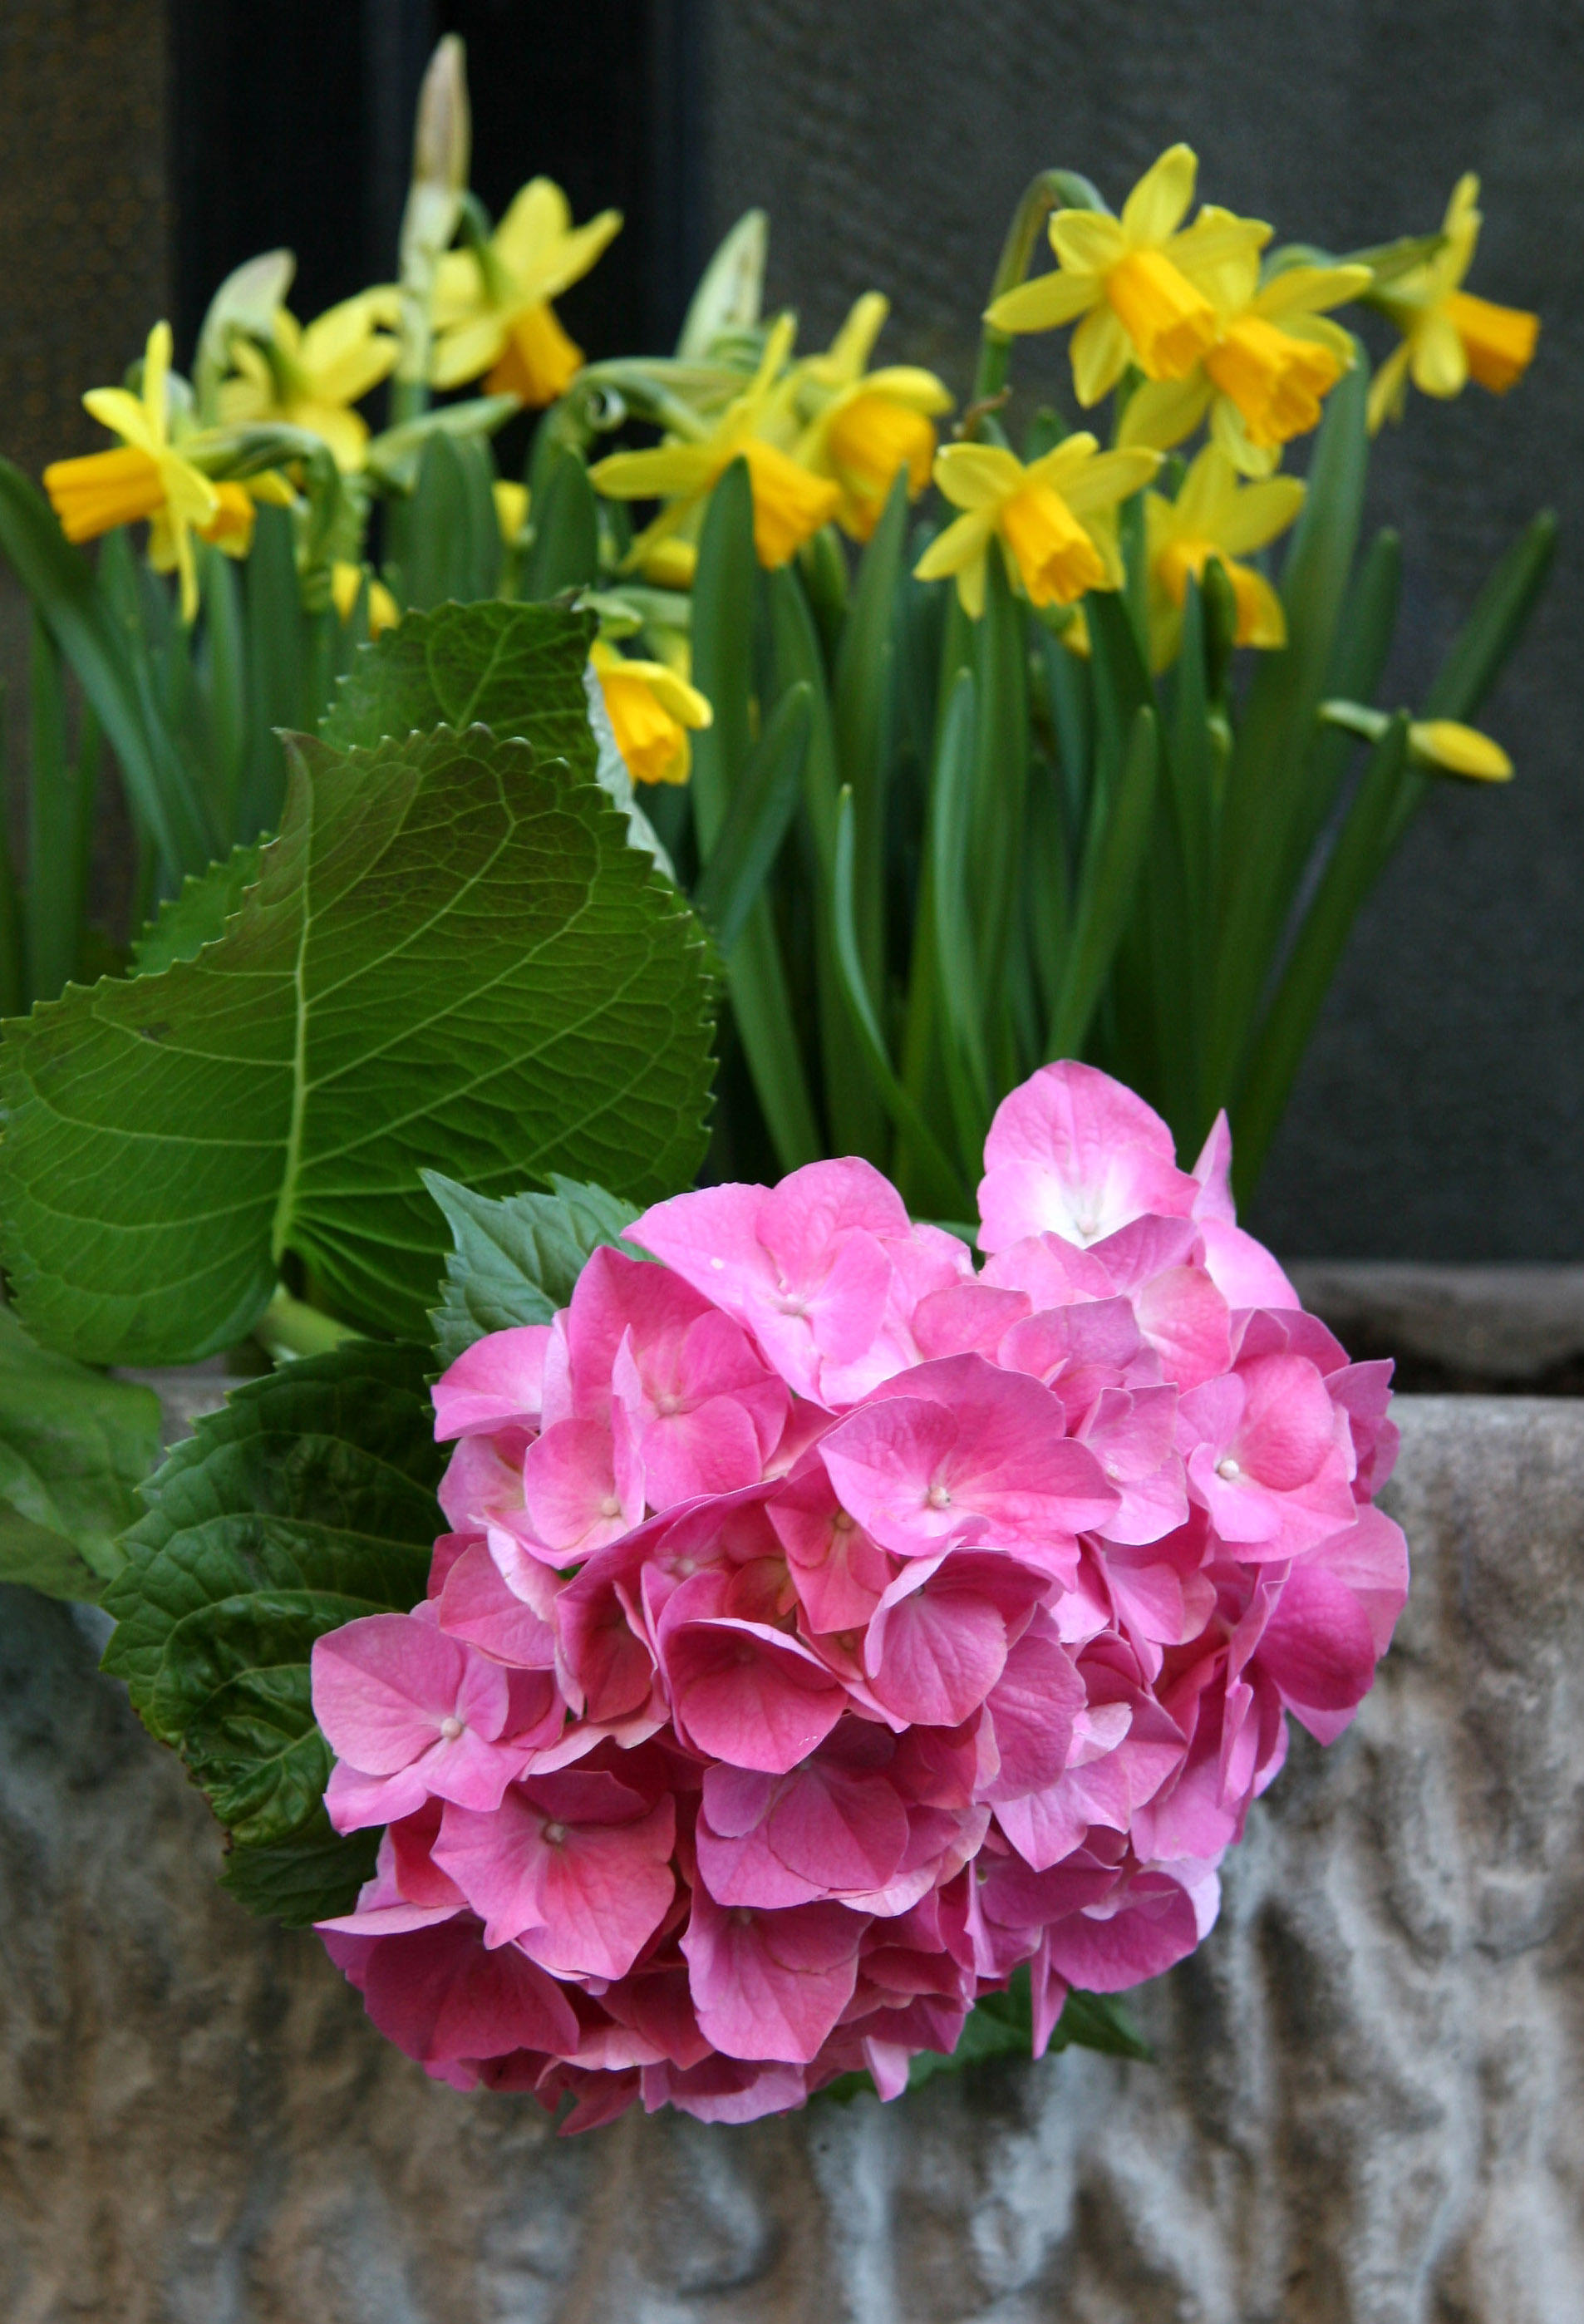 Washington Square Hotel Window Flower Box - Hydrangea & Daffodils